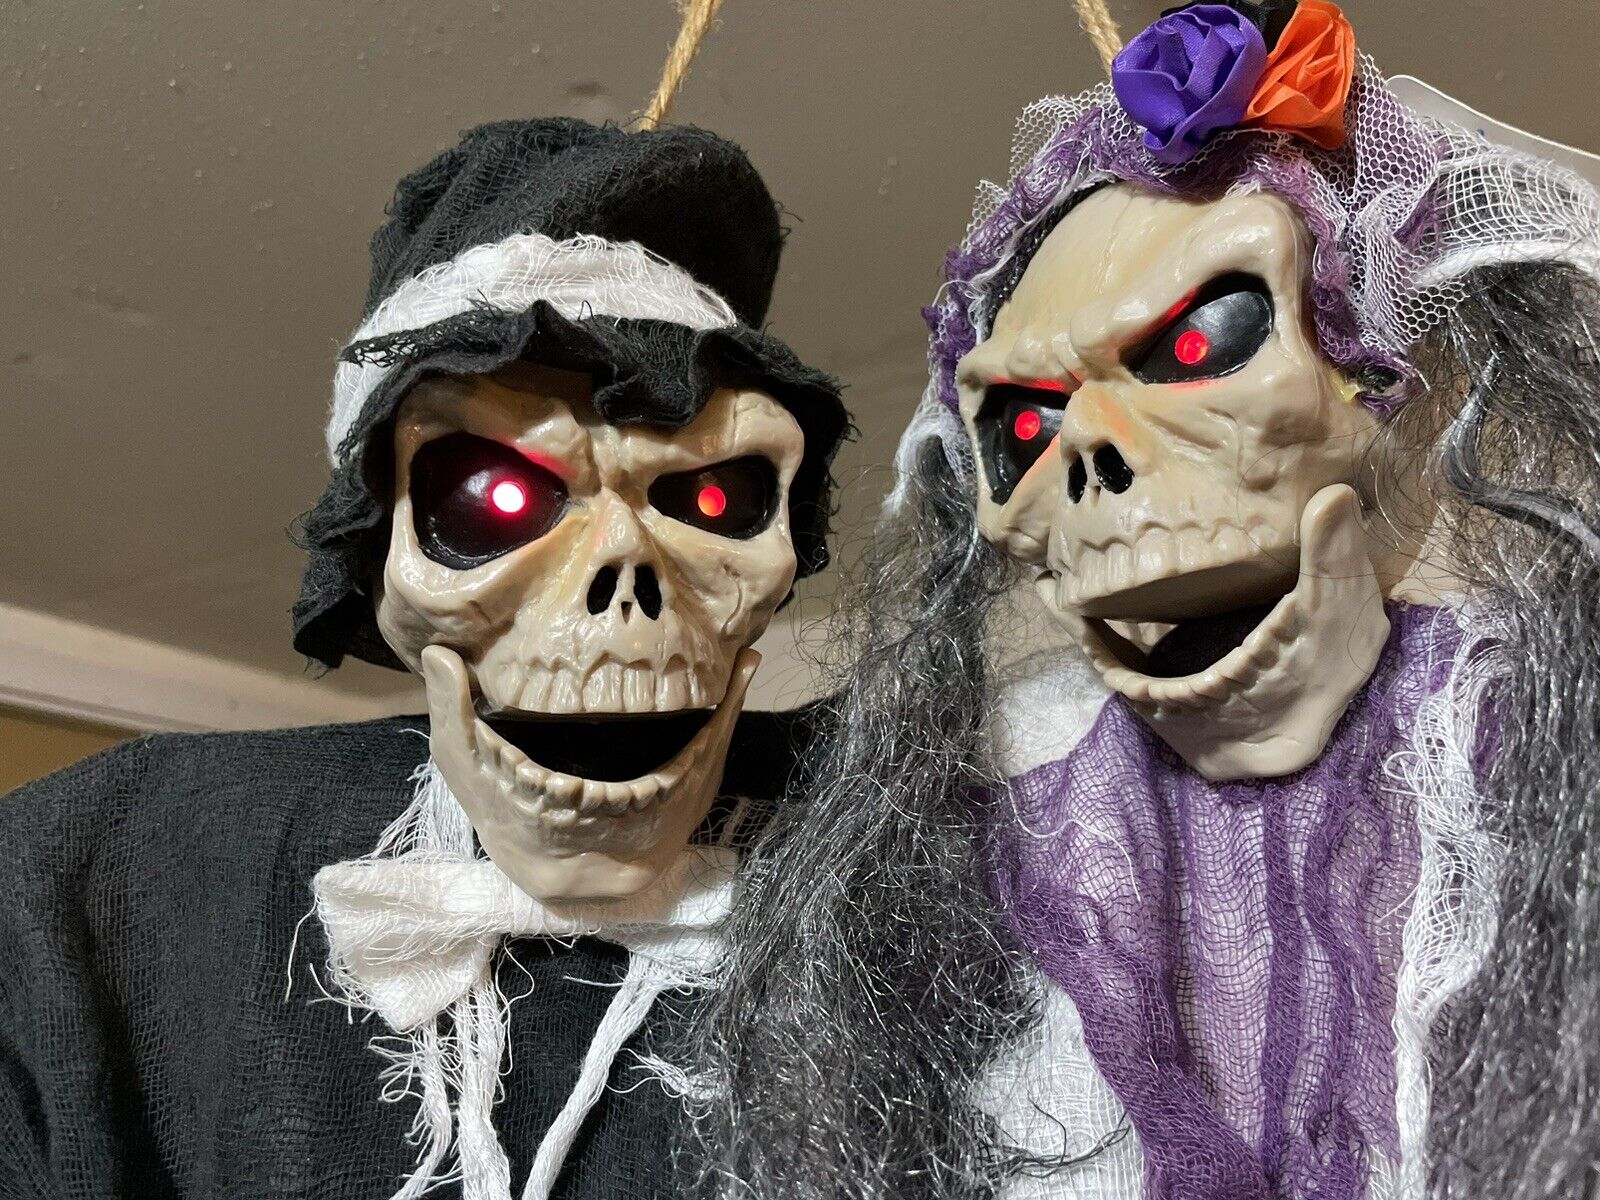 Magic Power Company PROTOTYPE Animated Singing Skeleton Couple Halloween Prop